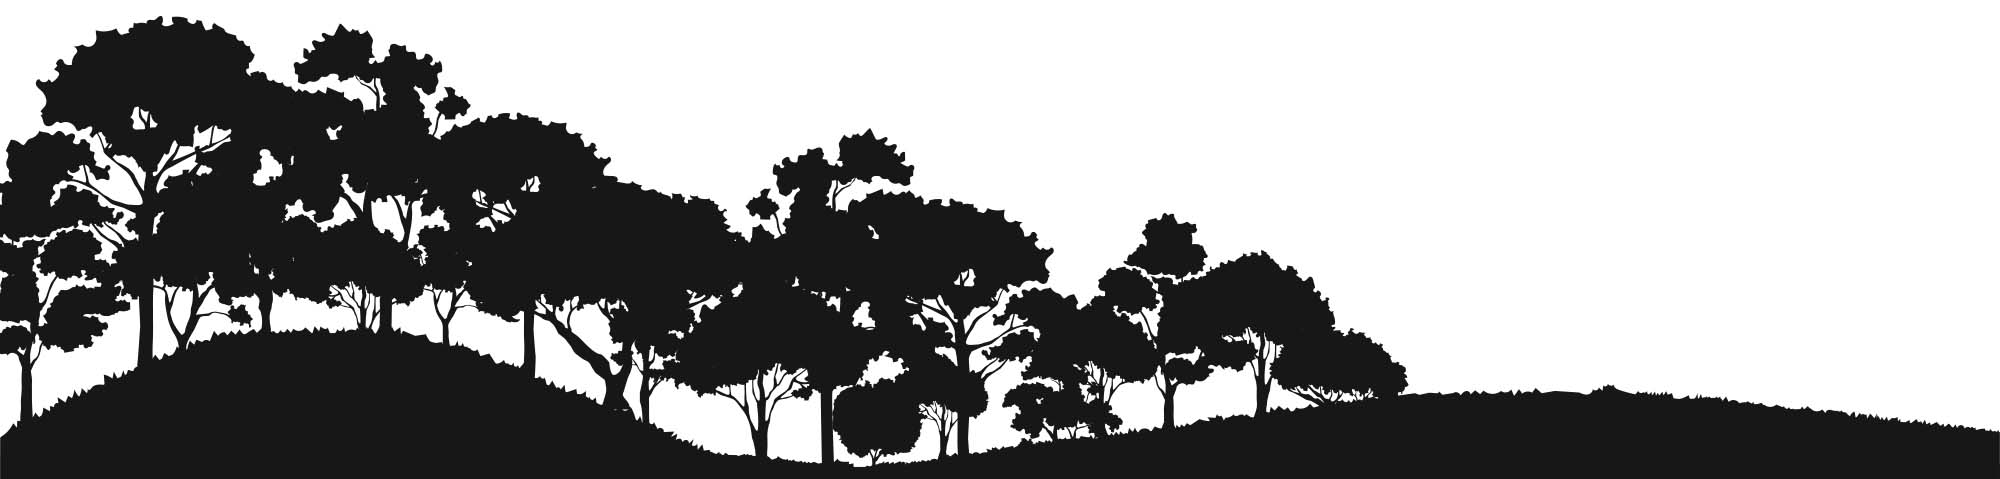 Row-trees.jpg